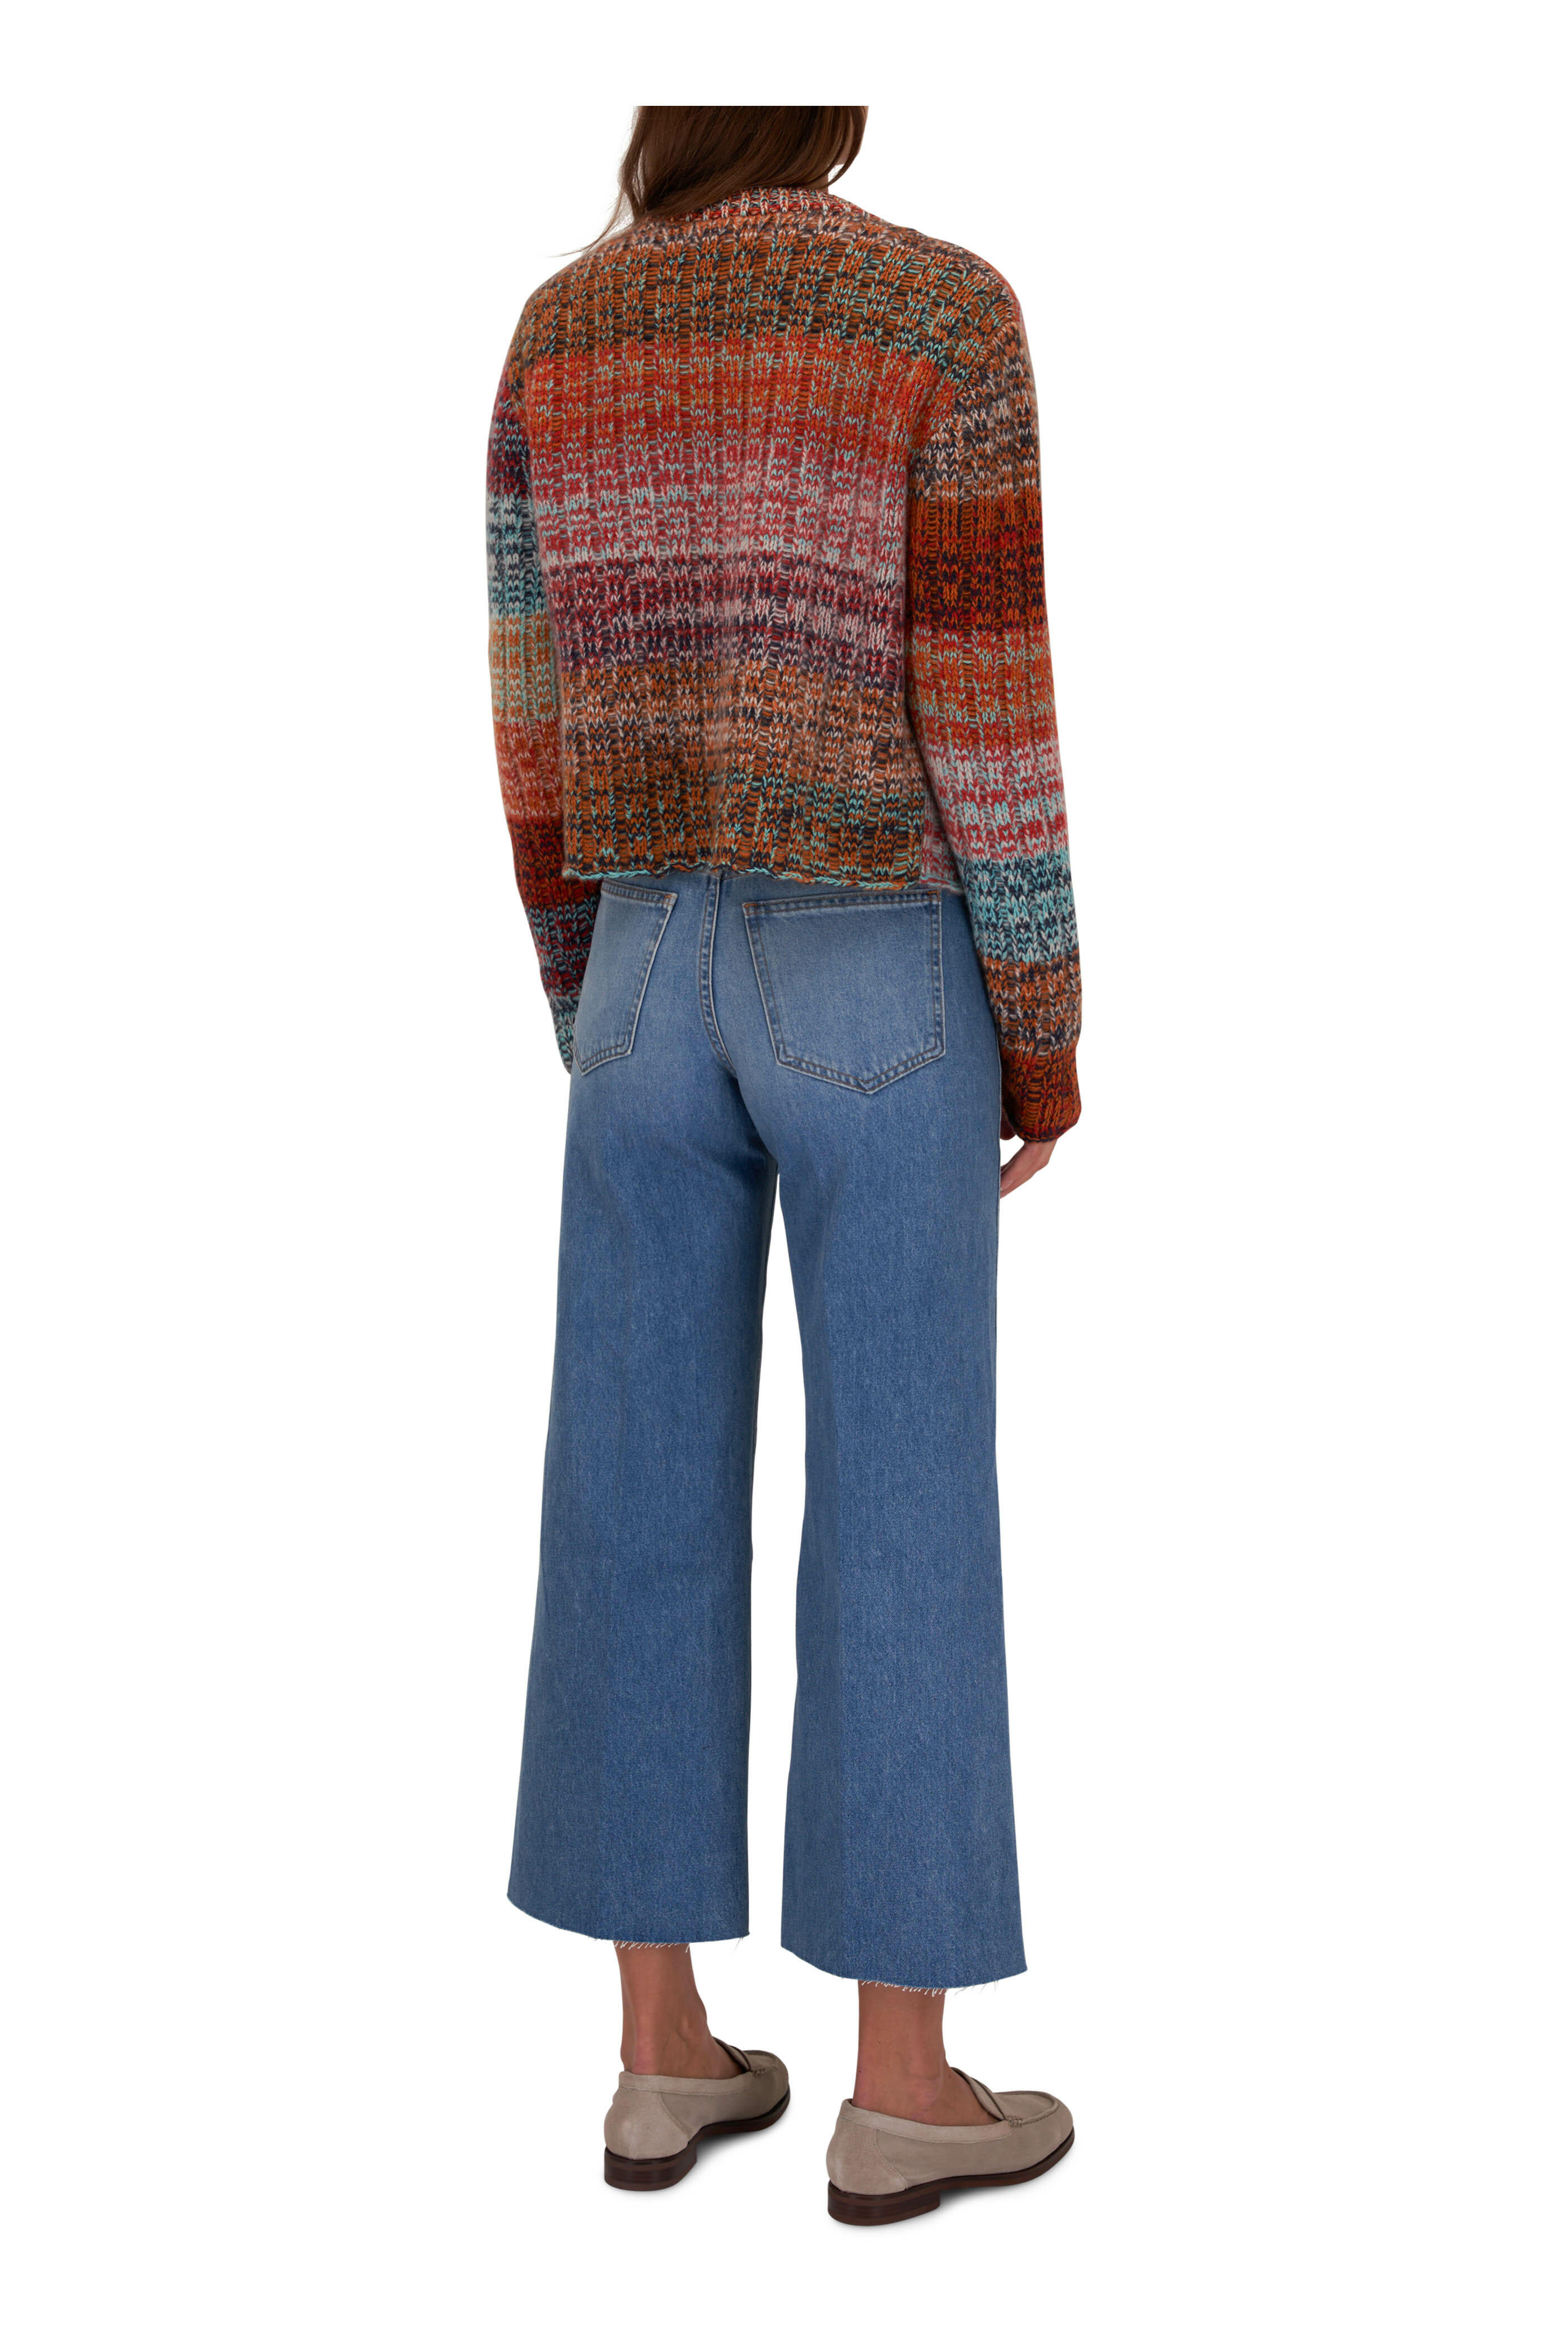 San Francisco Knit Style Woody Sweatshirt Hoodie - California